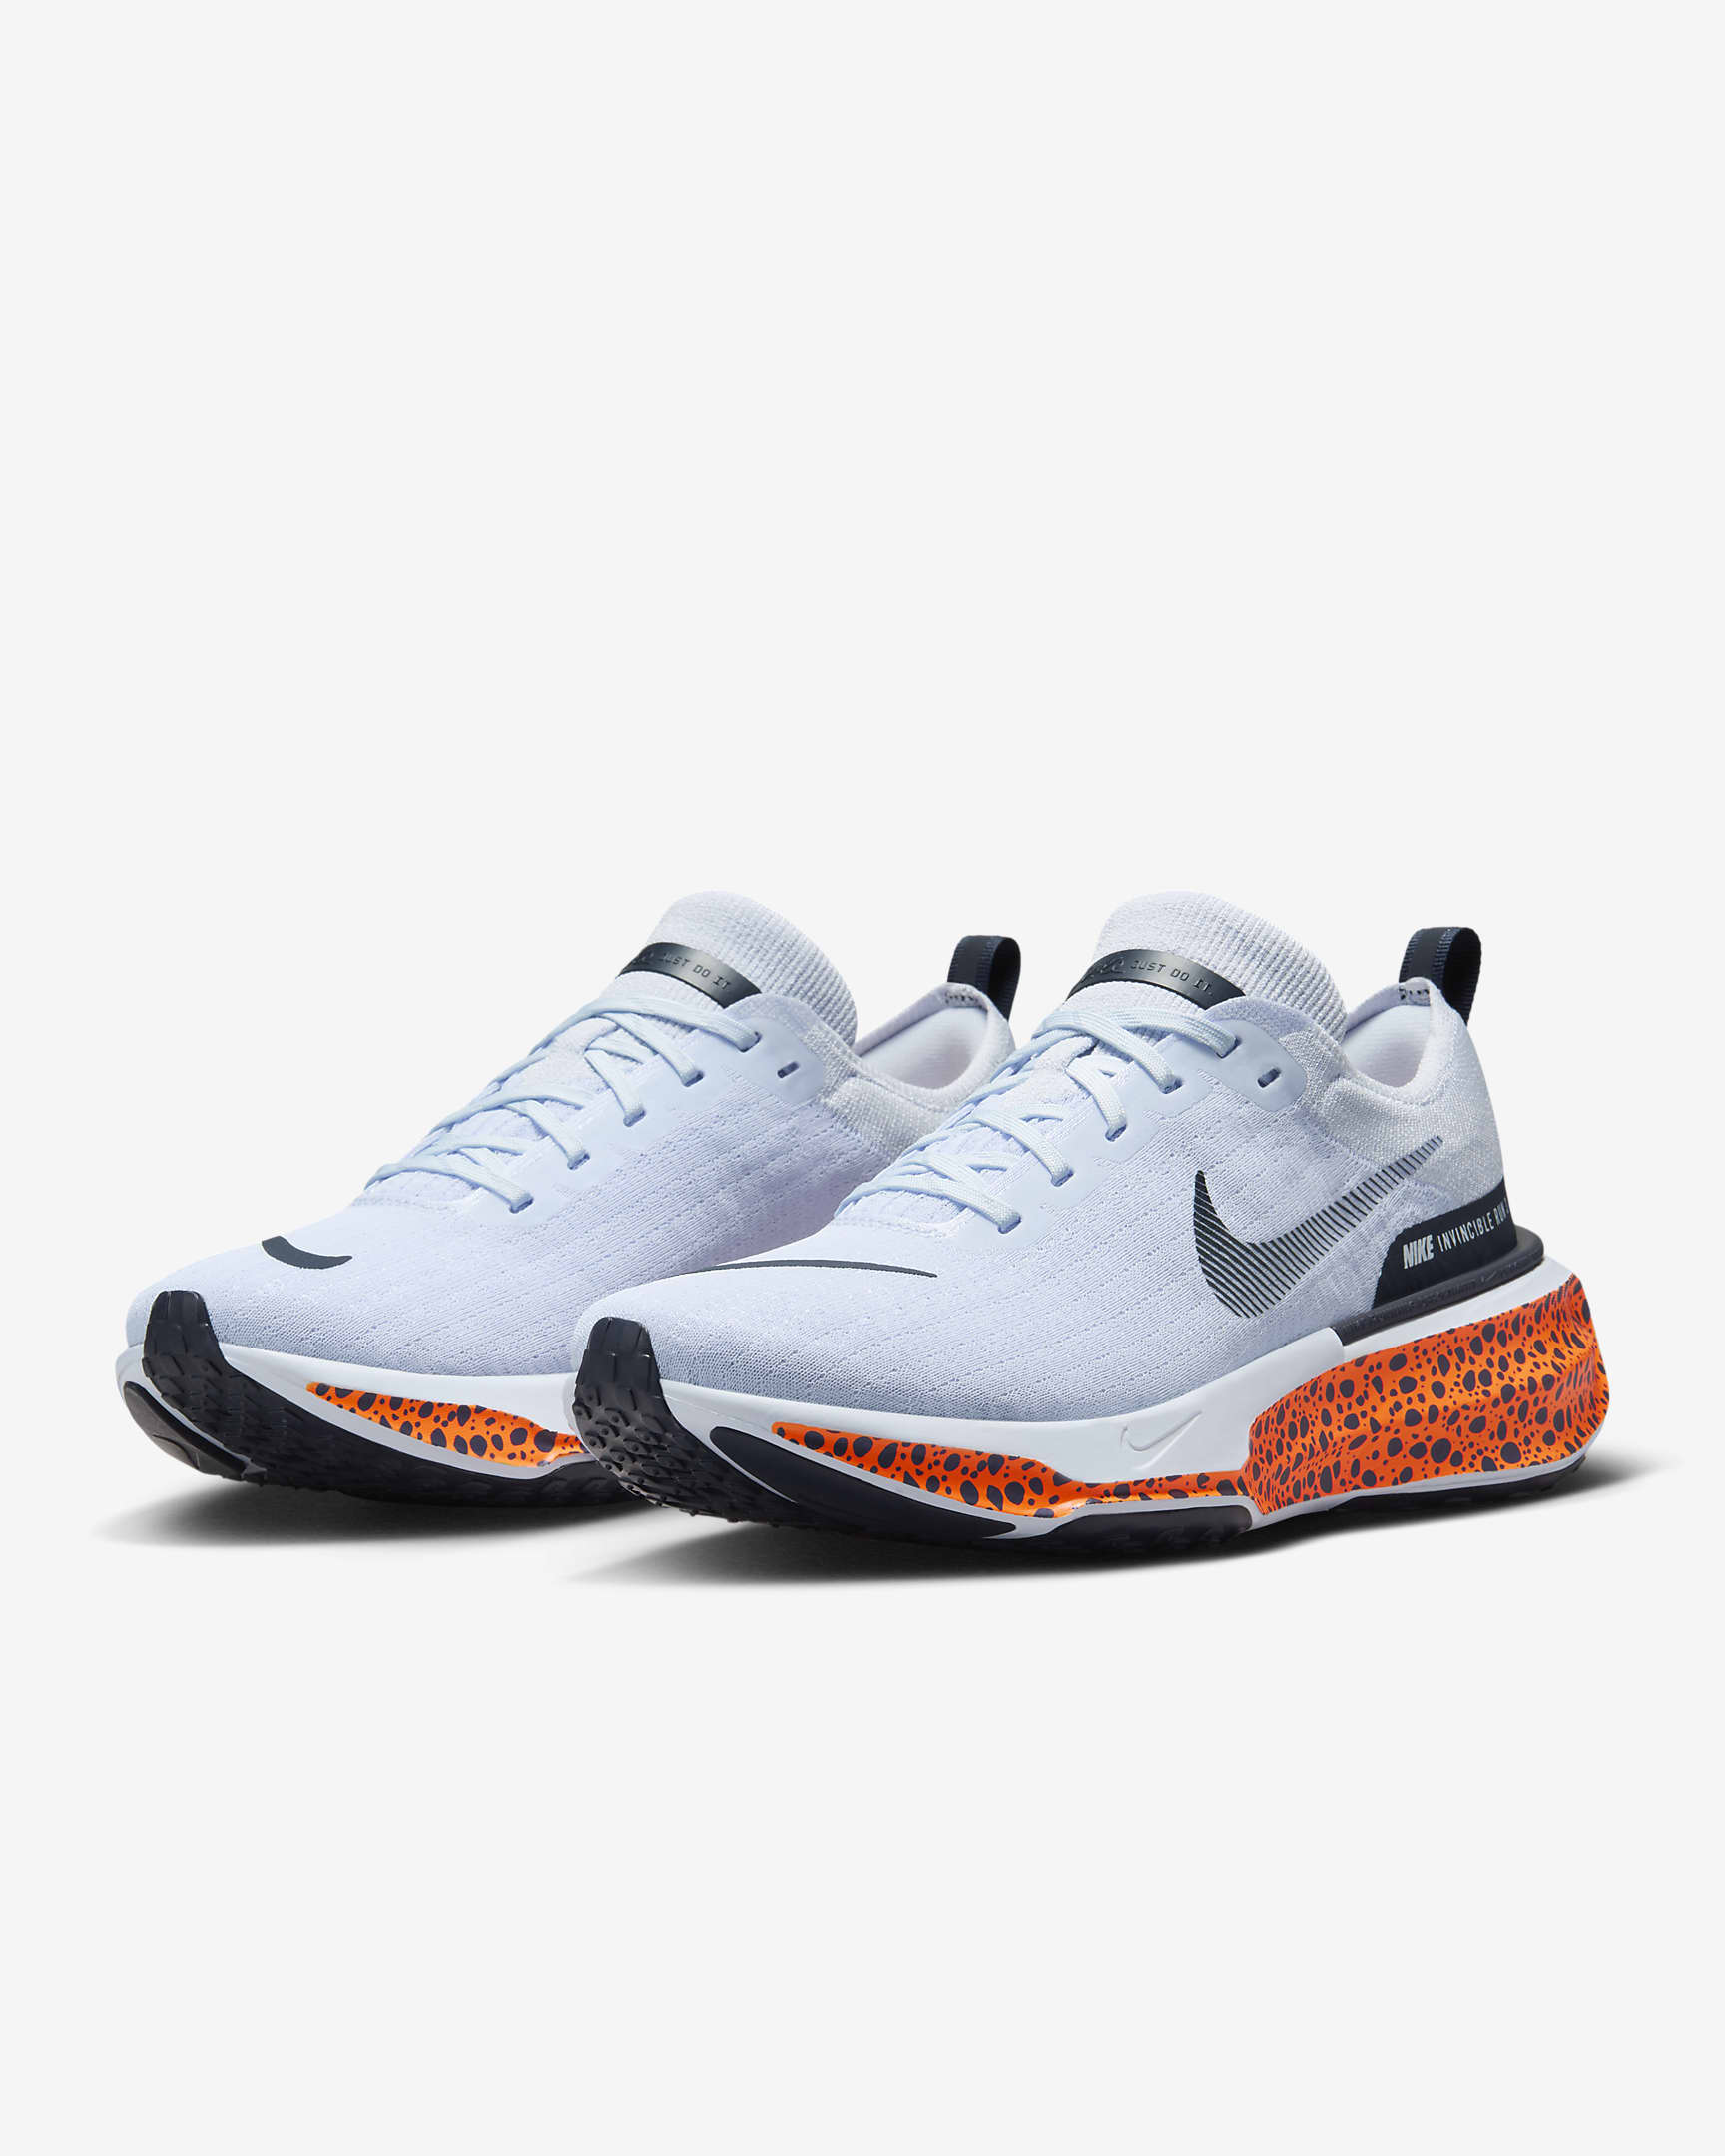 Nike Invincible 3 Electric Men's Road Running Shoes - Multi-Color/Multi-Color